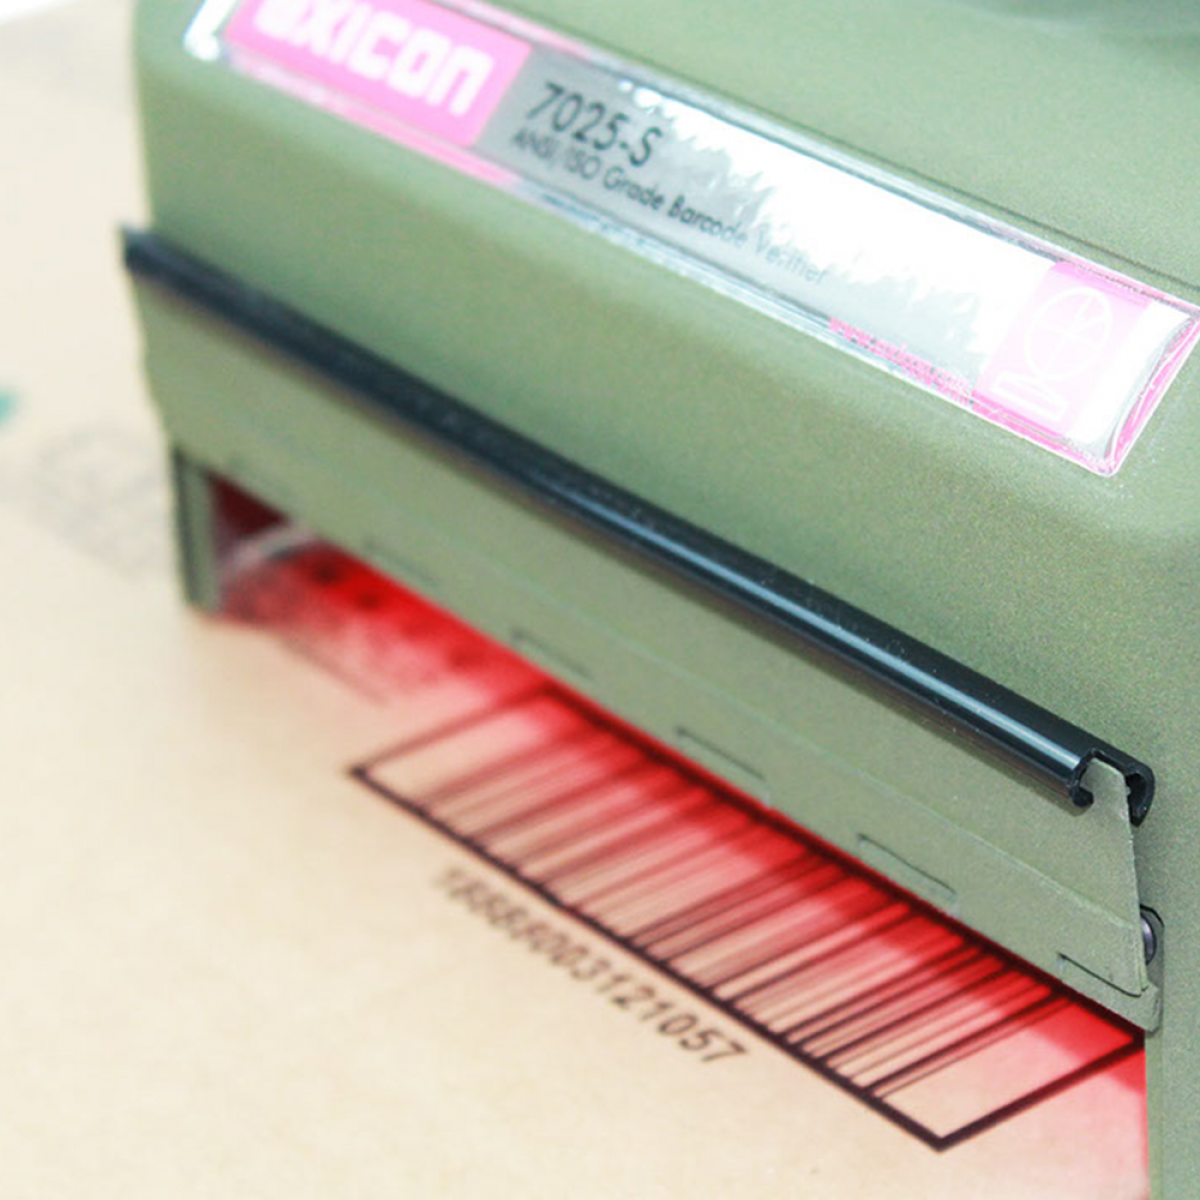 Axicon 7025-S: Portable verifier for checking barcode quality